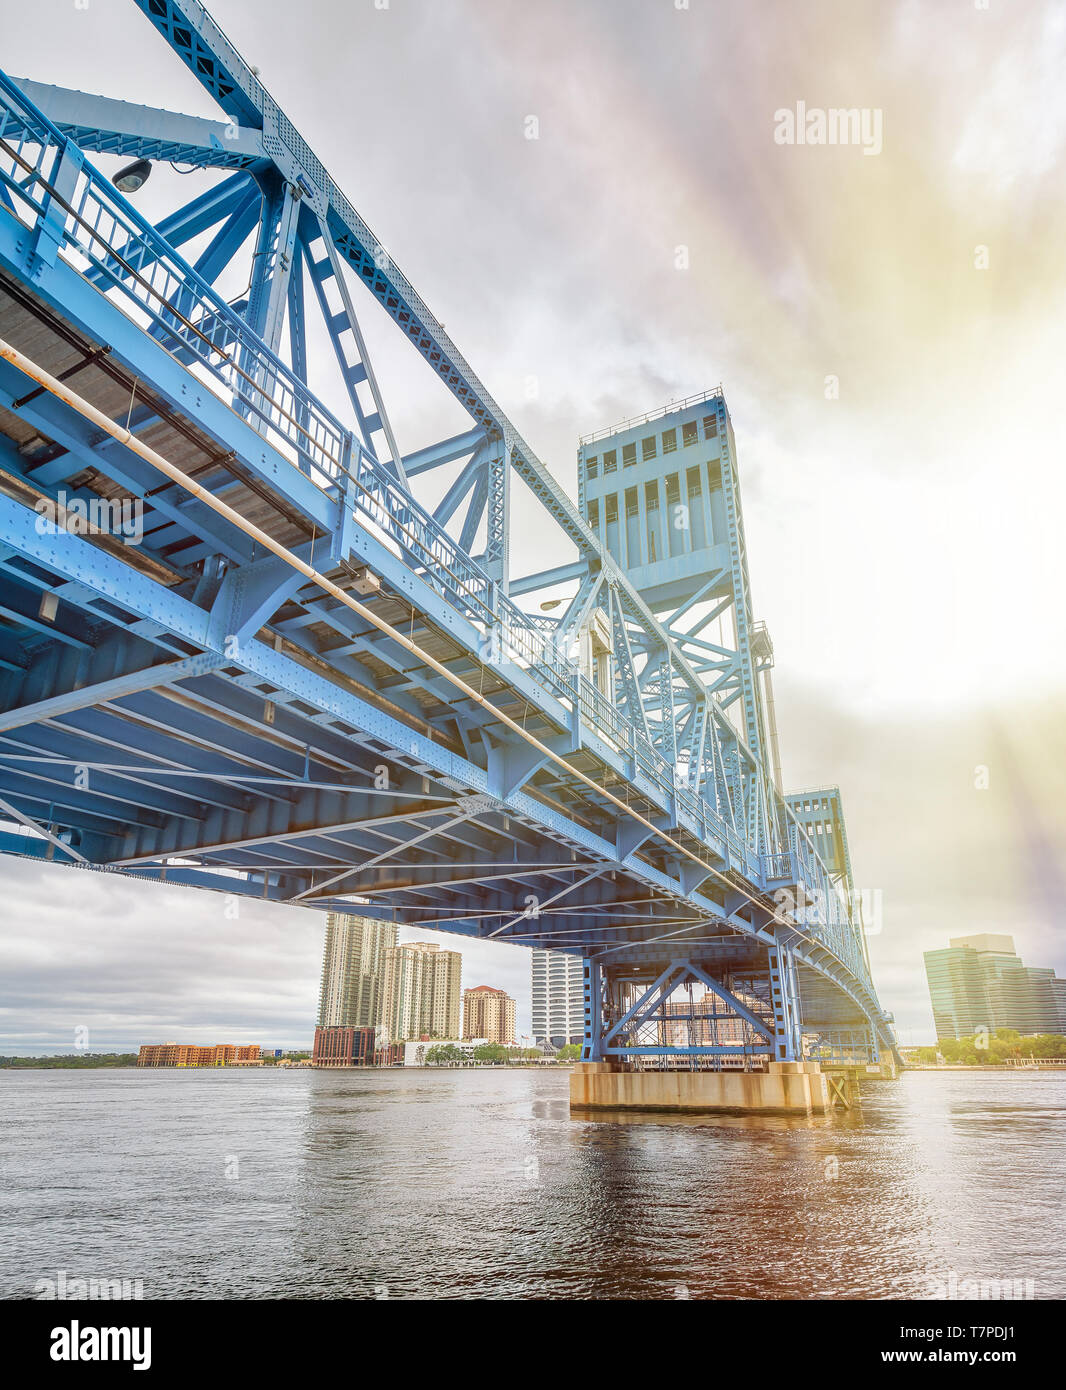 John T. Alsop Jr. Bridge in Jacksonville, FL. It is a bridge crossing the St. Johns River . Stock Photo